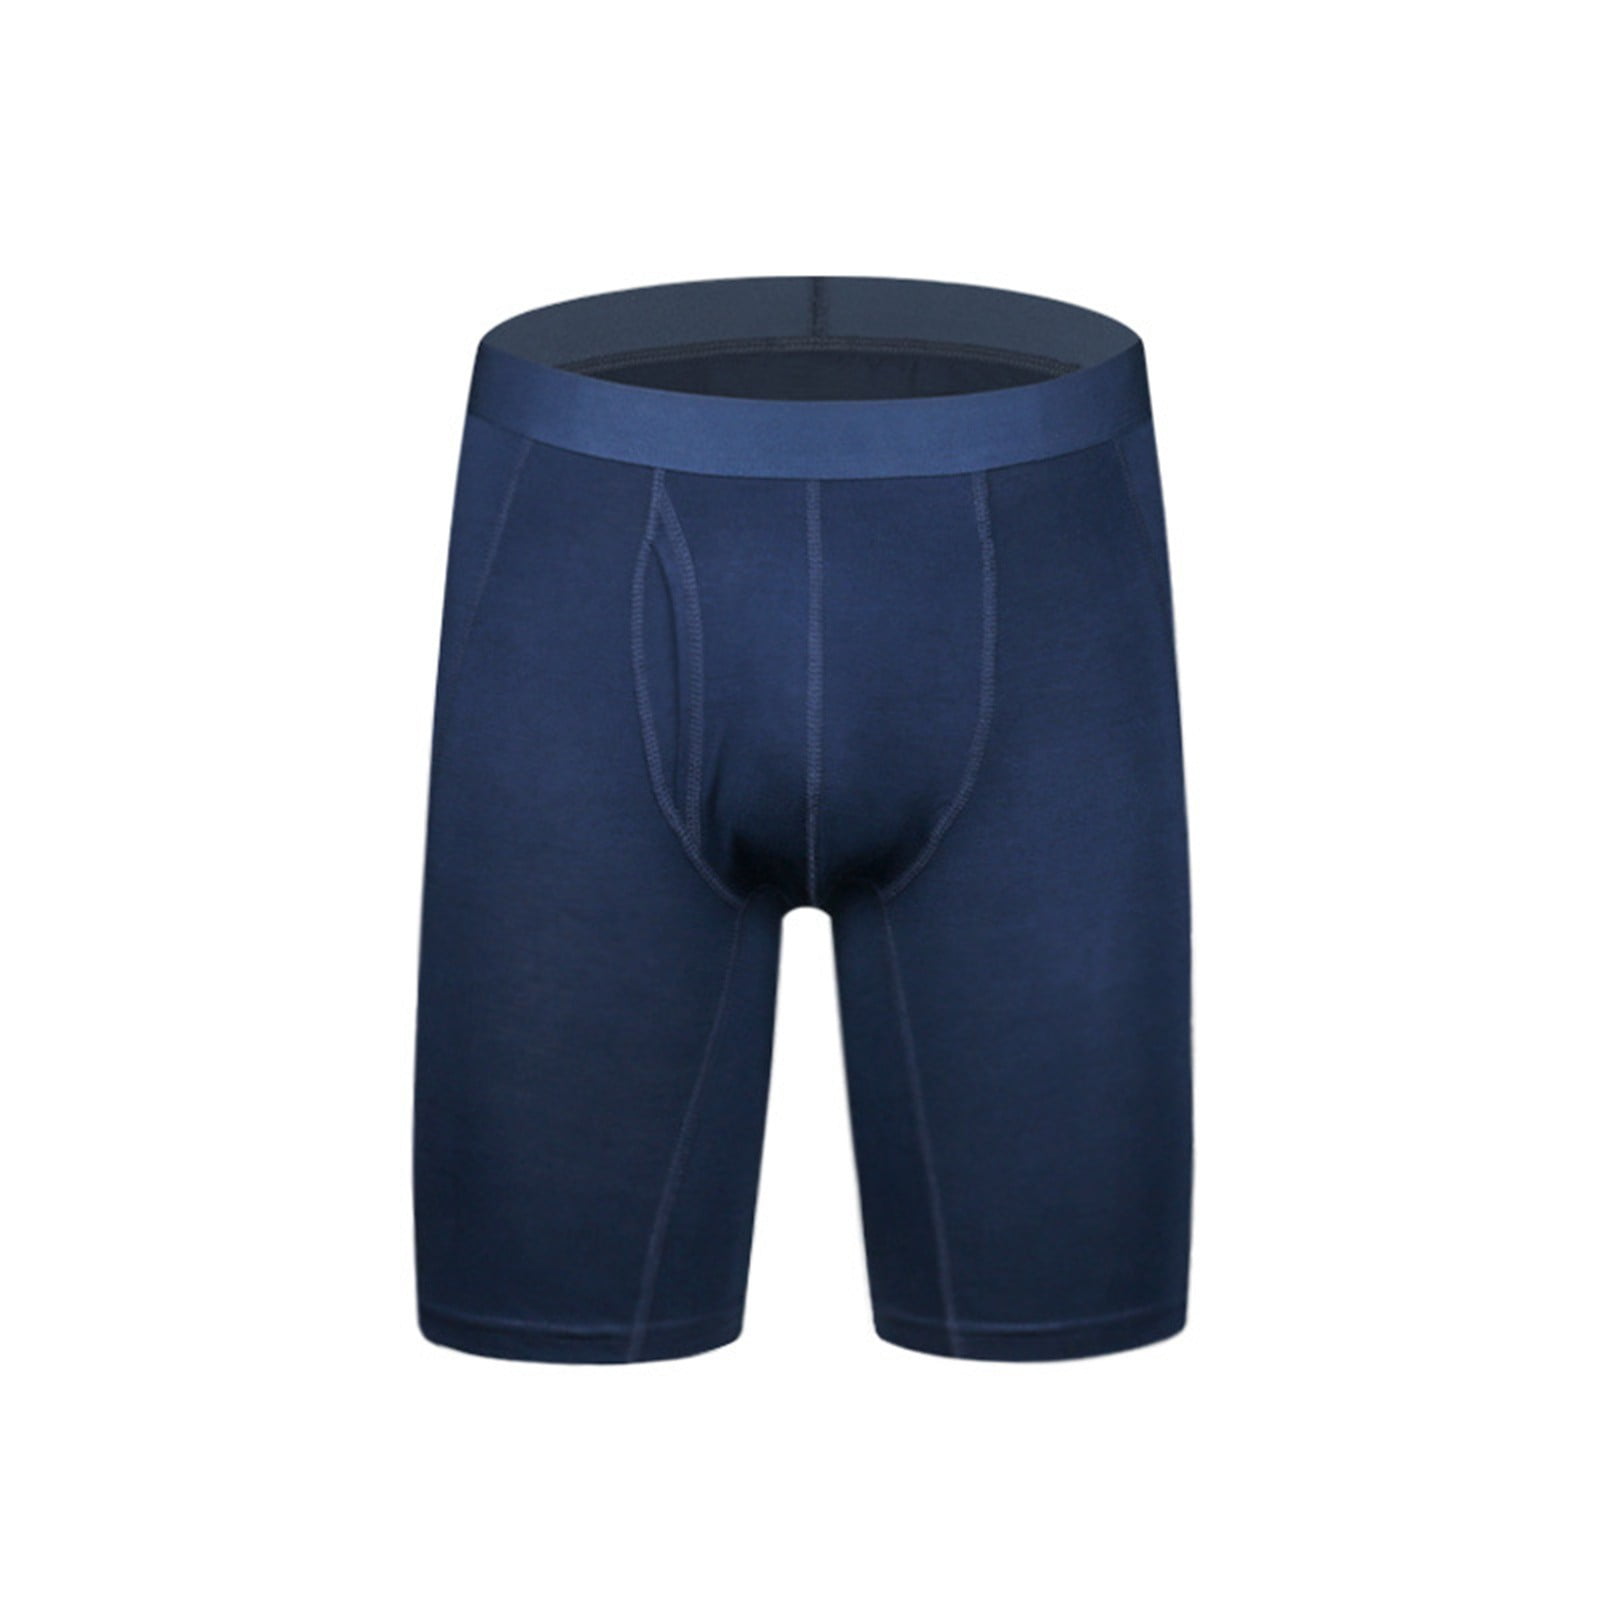 KaLI_store Boxer Briefs for Men Pack Men's Polyester Blend Total Support  Pouch Boxer Brief Blue,3XL 